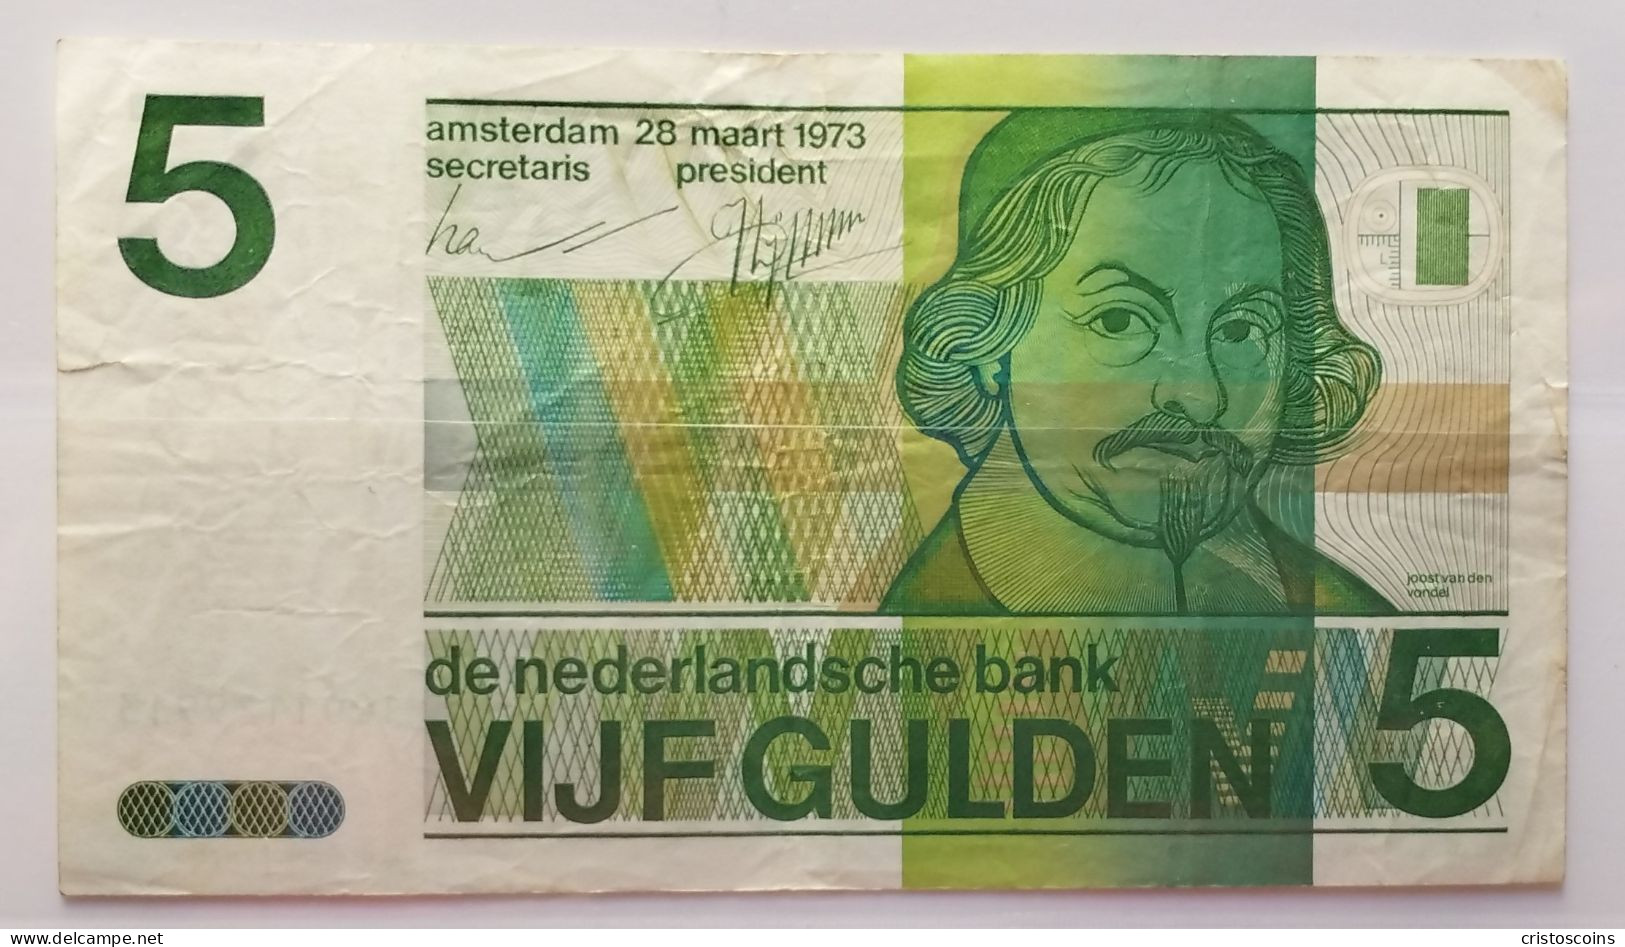 Paesi Basi 5 Gulden 1973 P-95a VF (B/78 - 5 Gulden